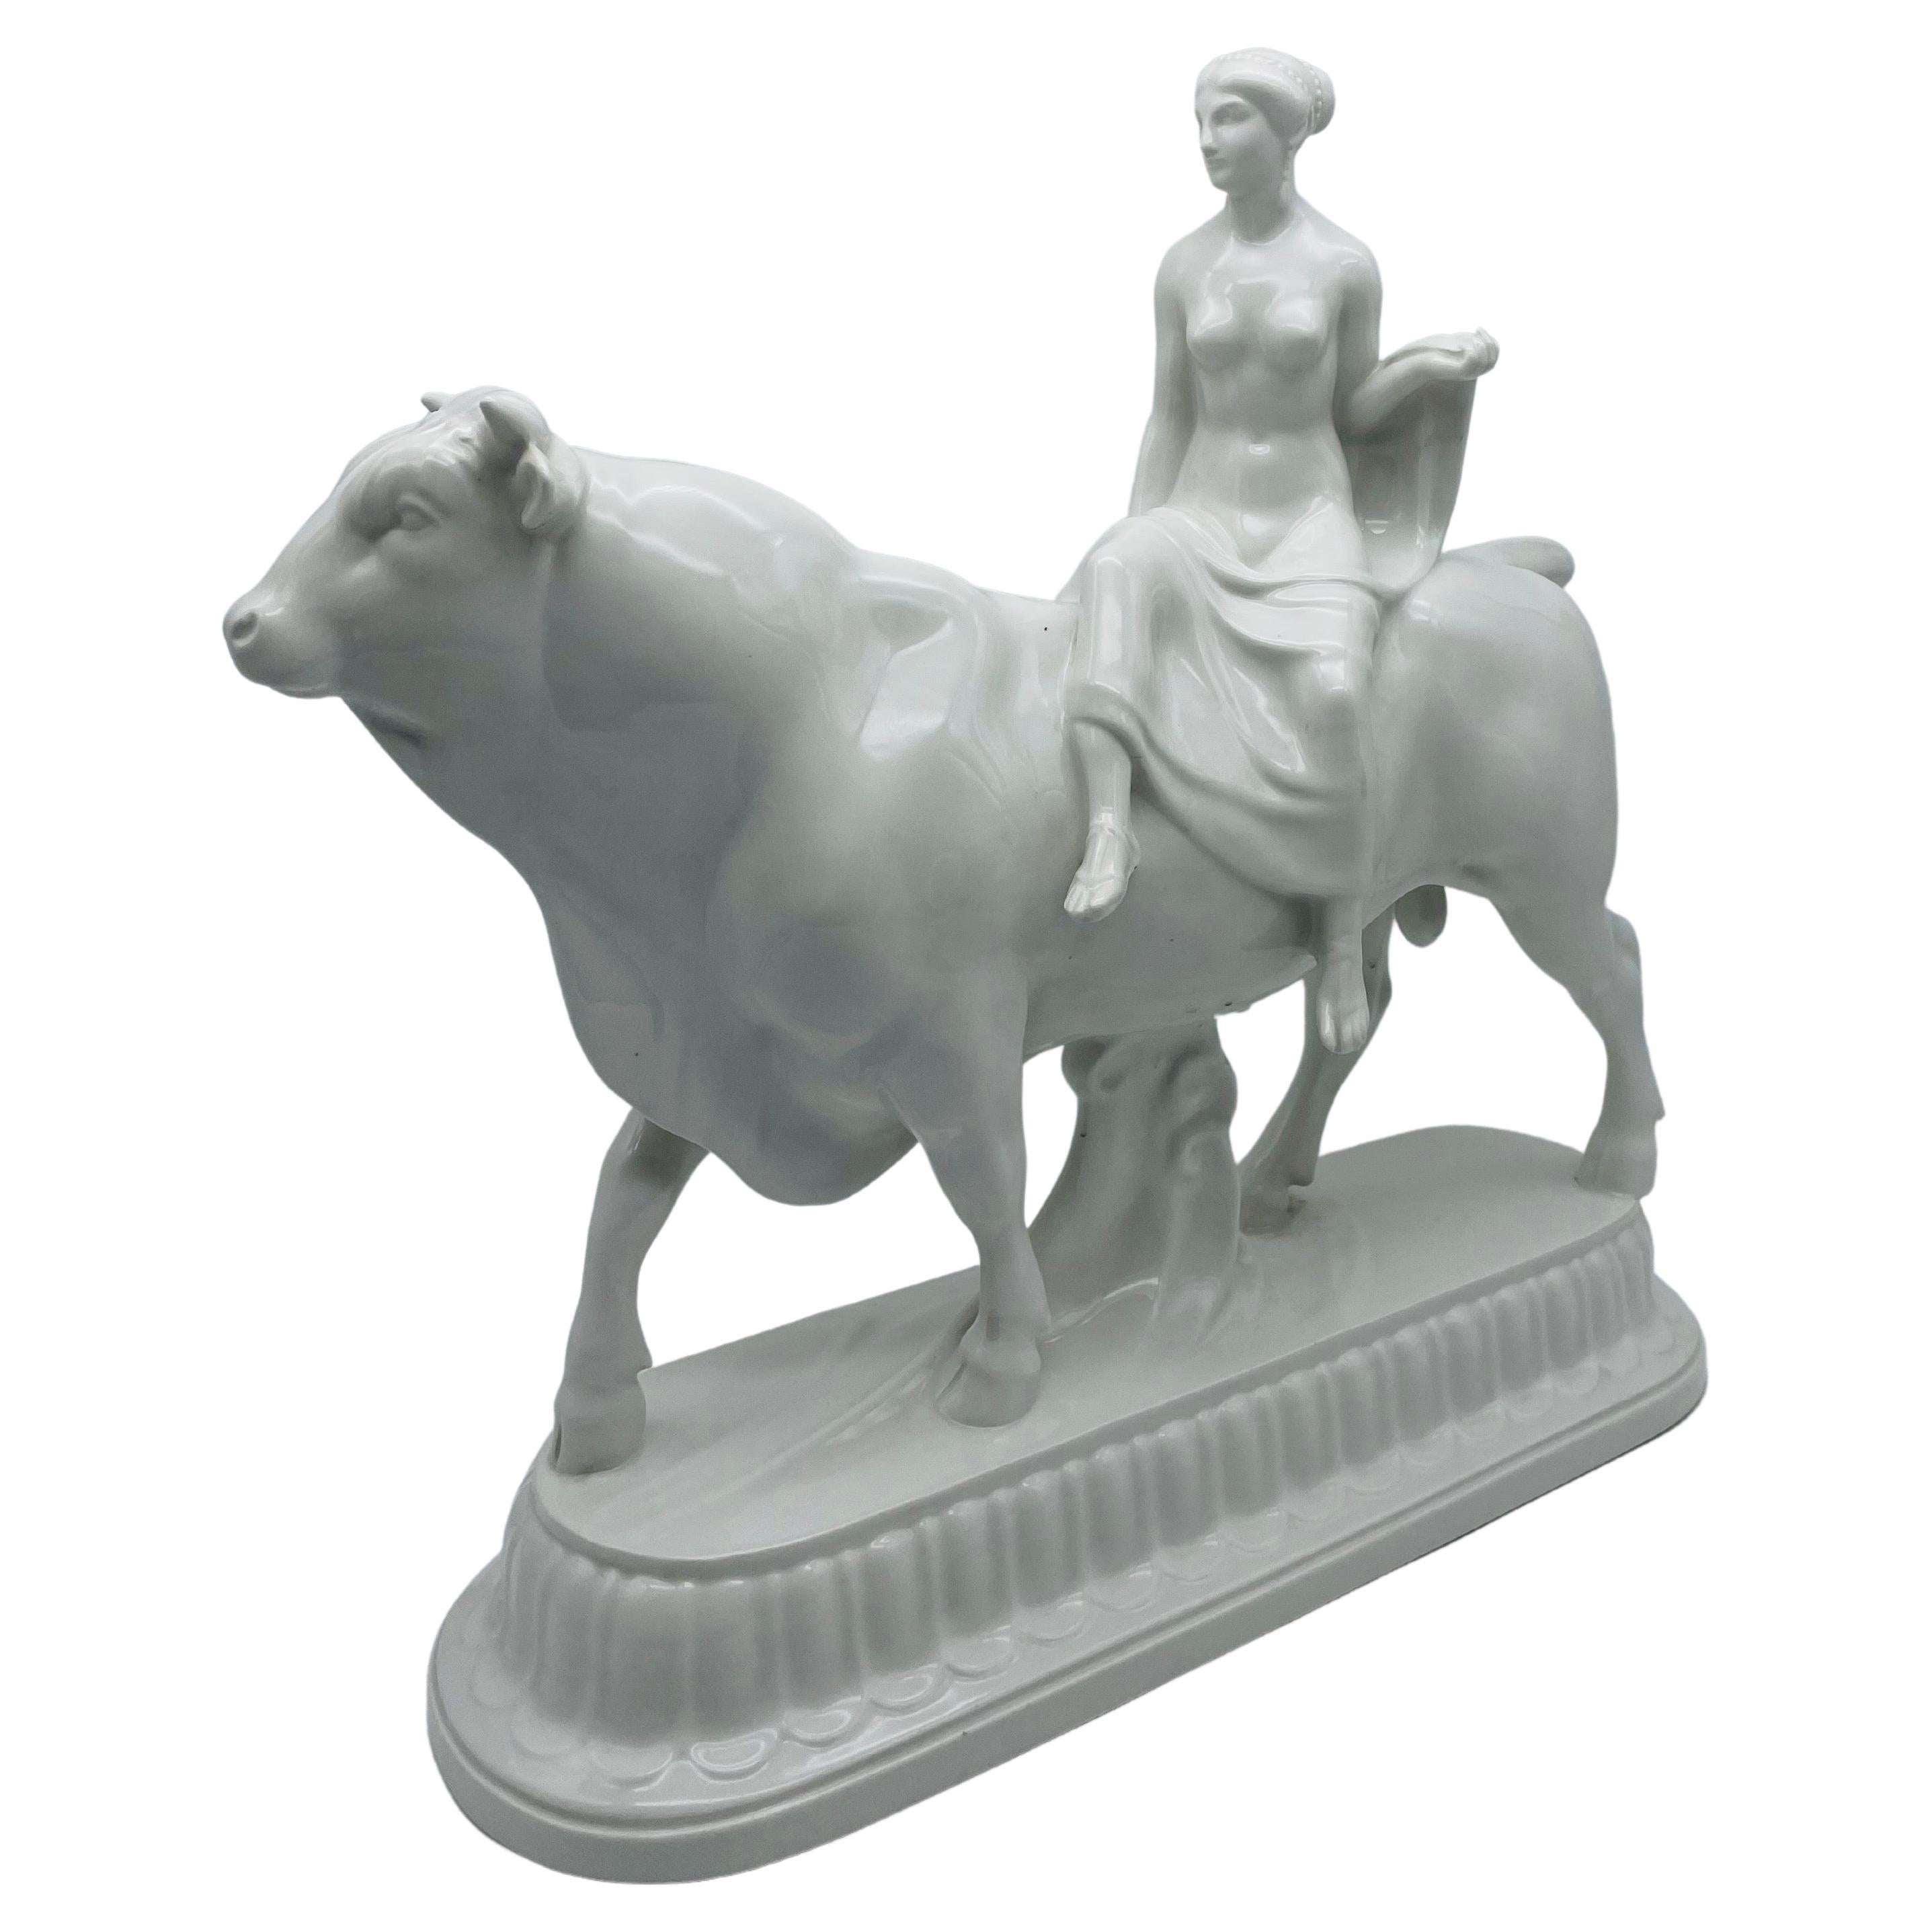 Kpm Berlin Art Nouveau Figure "Europe on Bull" Adolf Amberg For Sale